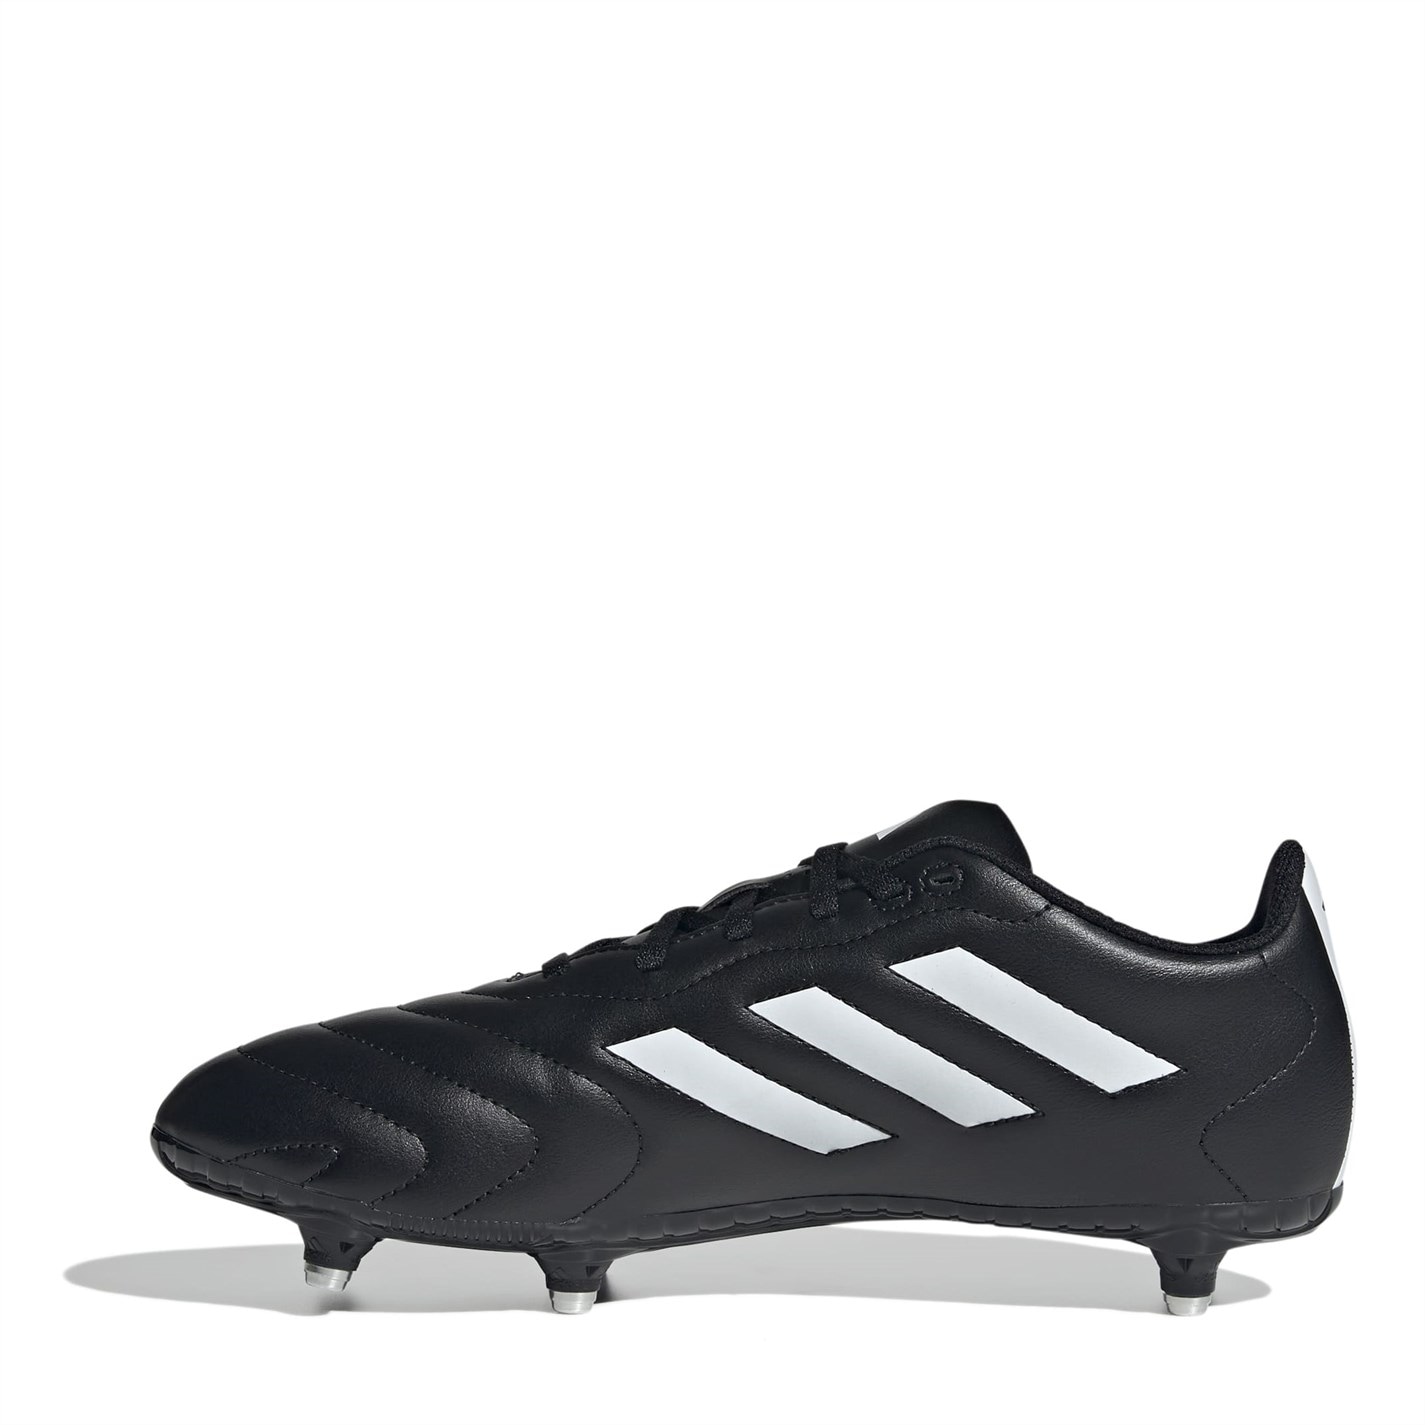 adidas Goletto VIII Soft Ground Football Boots